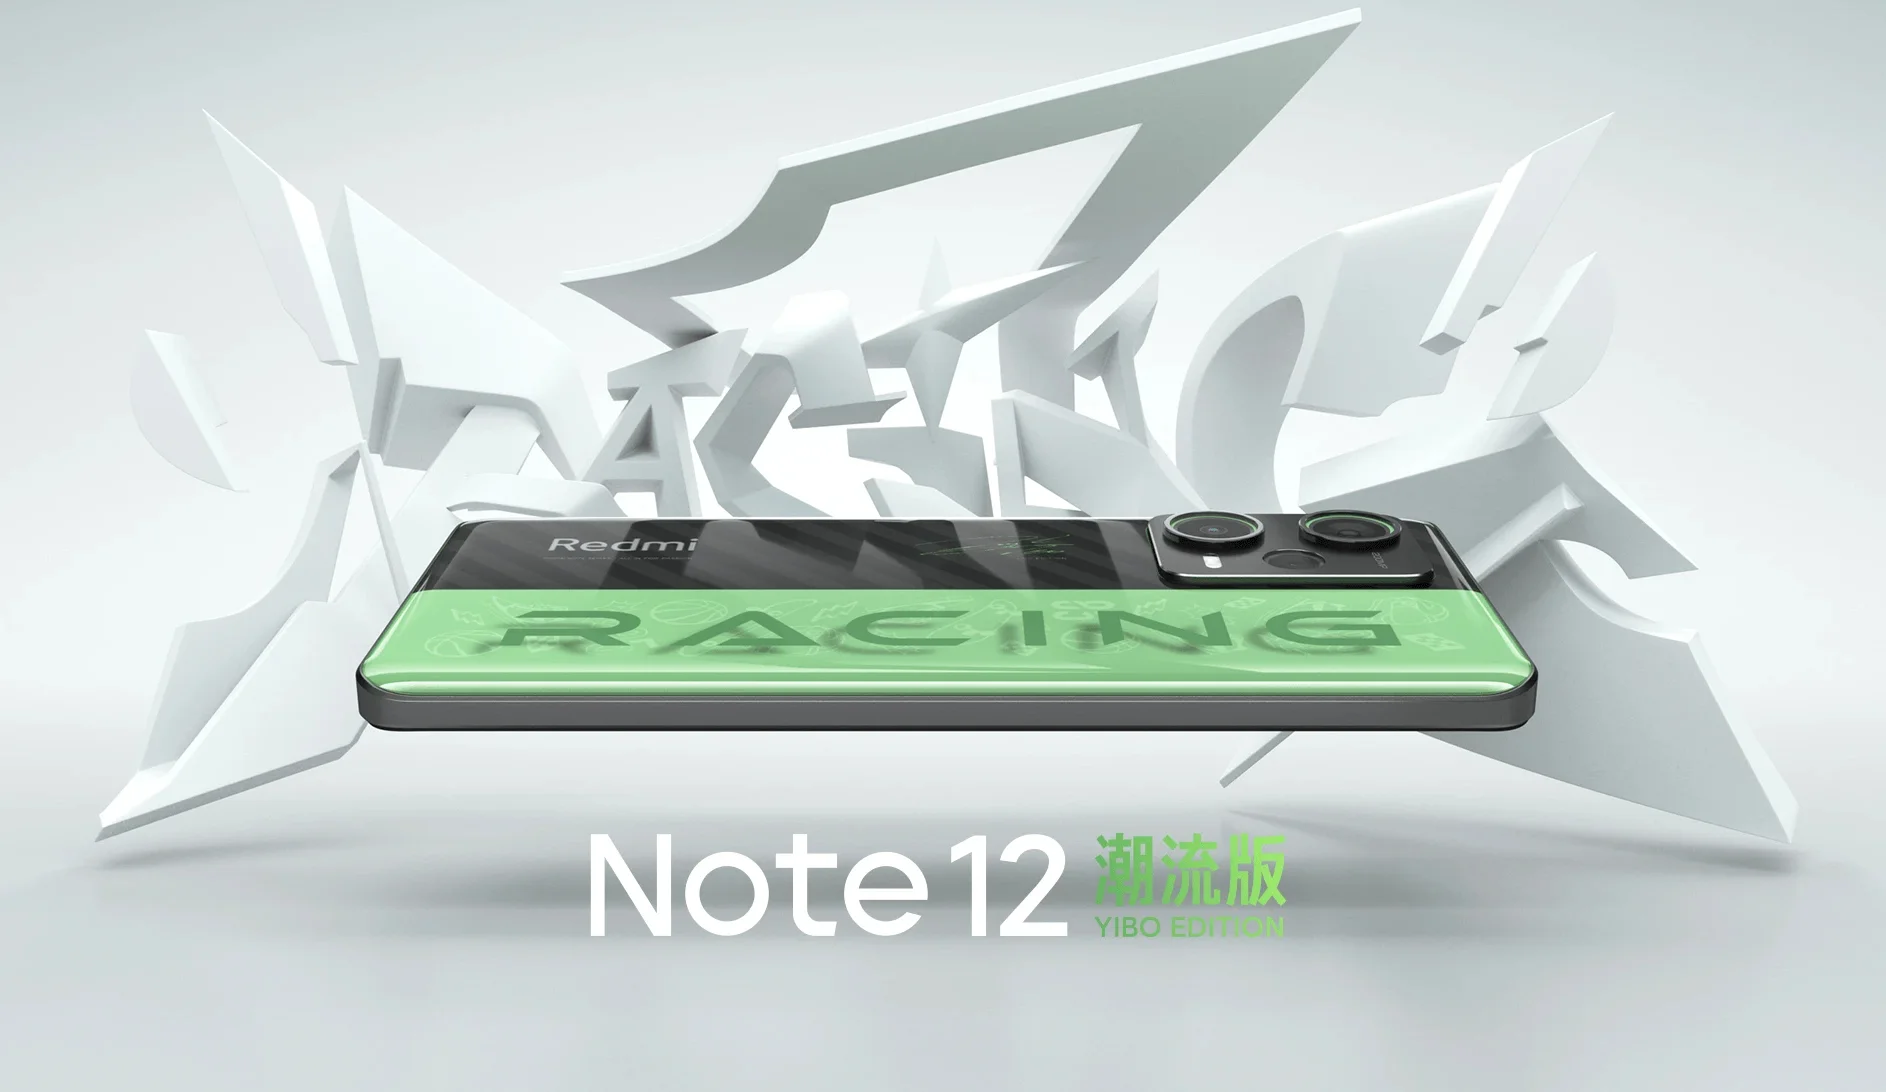 Представлений смартфон Redmi Note 12 Racing Edition